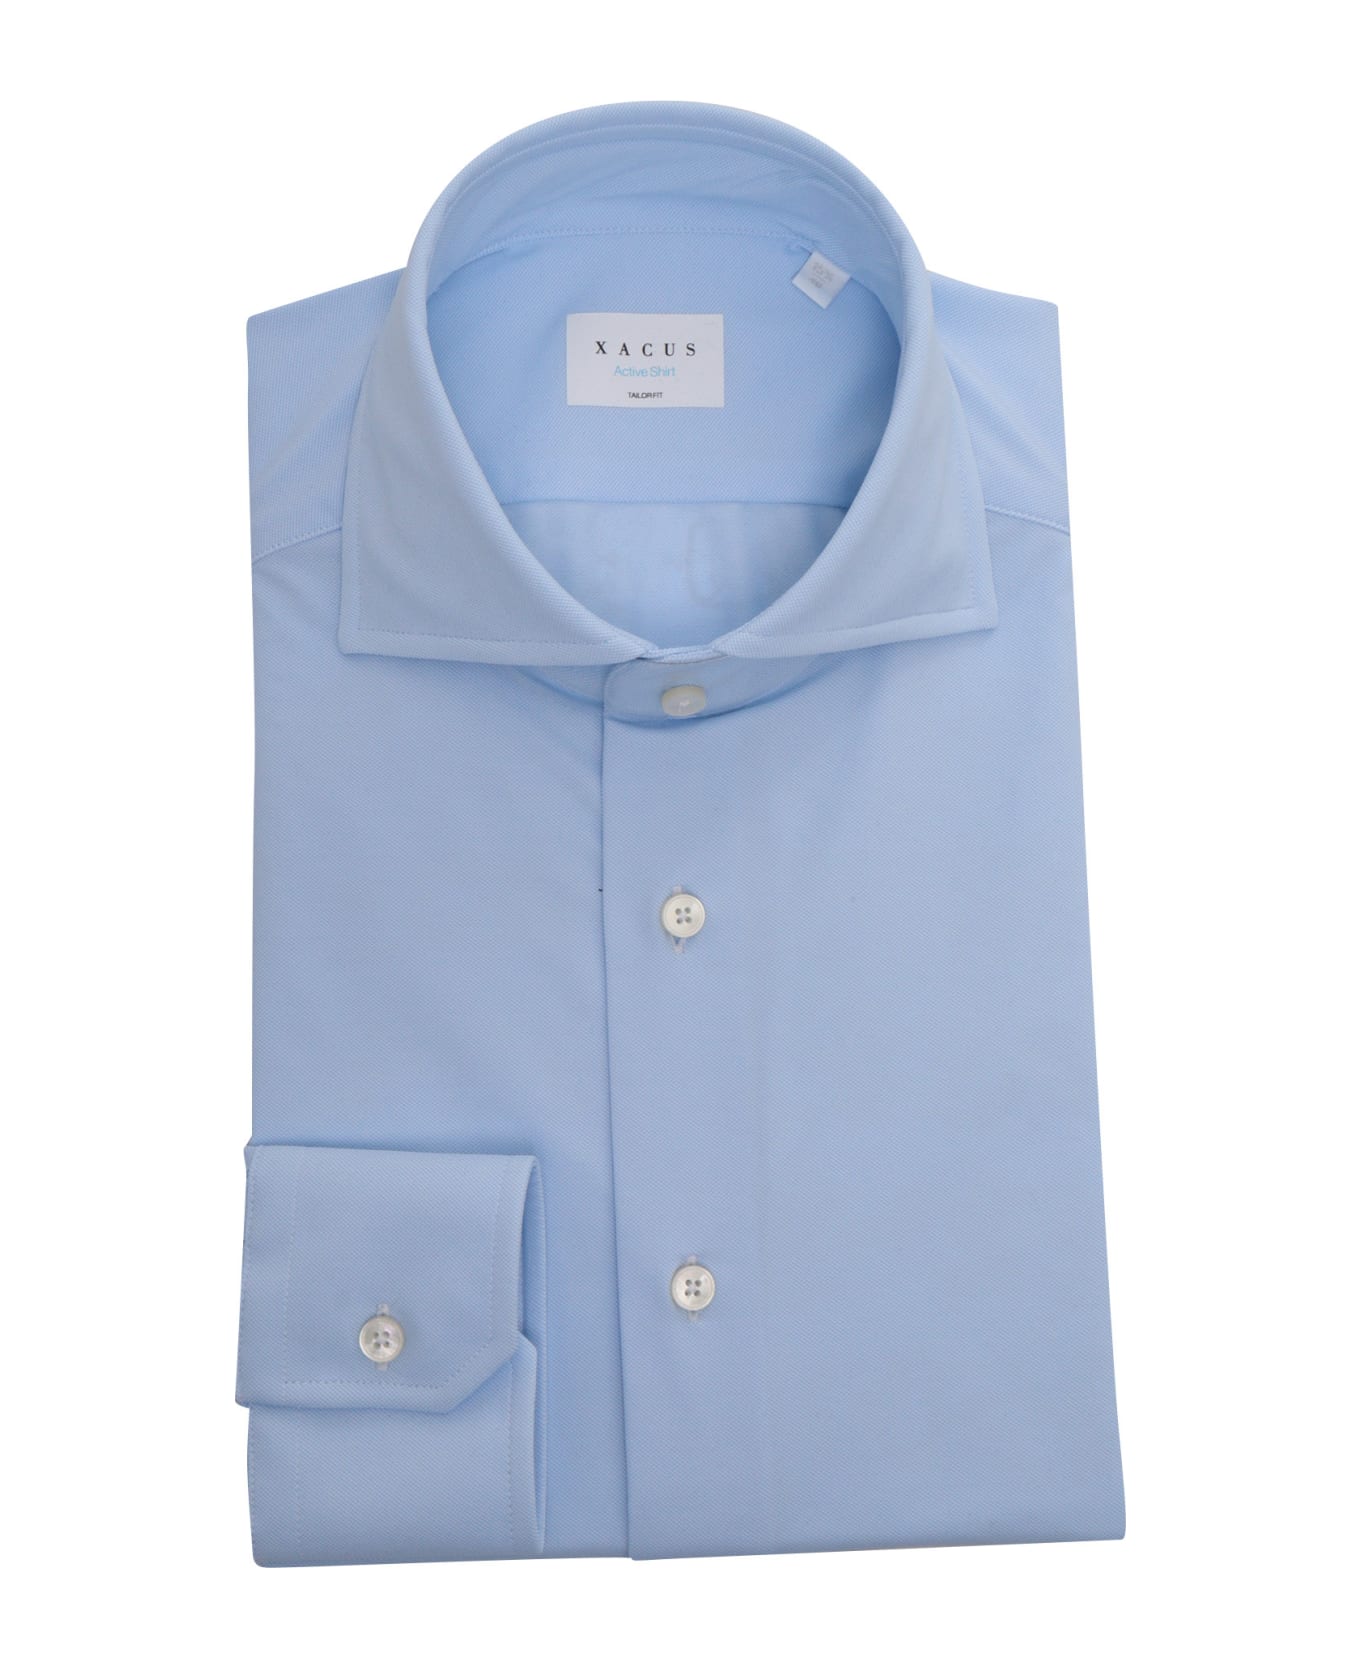 Xacus Light Blue Striped Shirt With Pocket - LIGHT BLUE シャツ